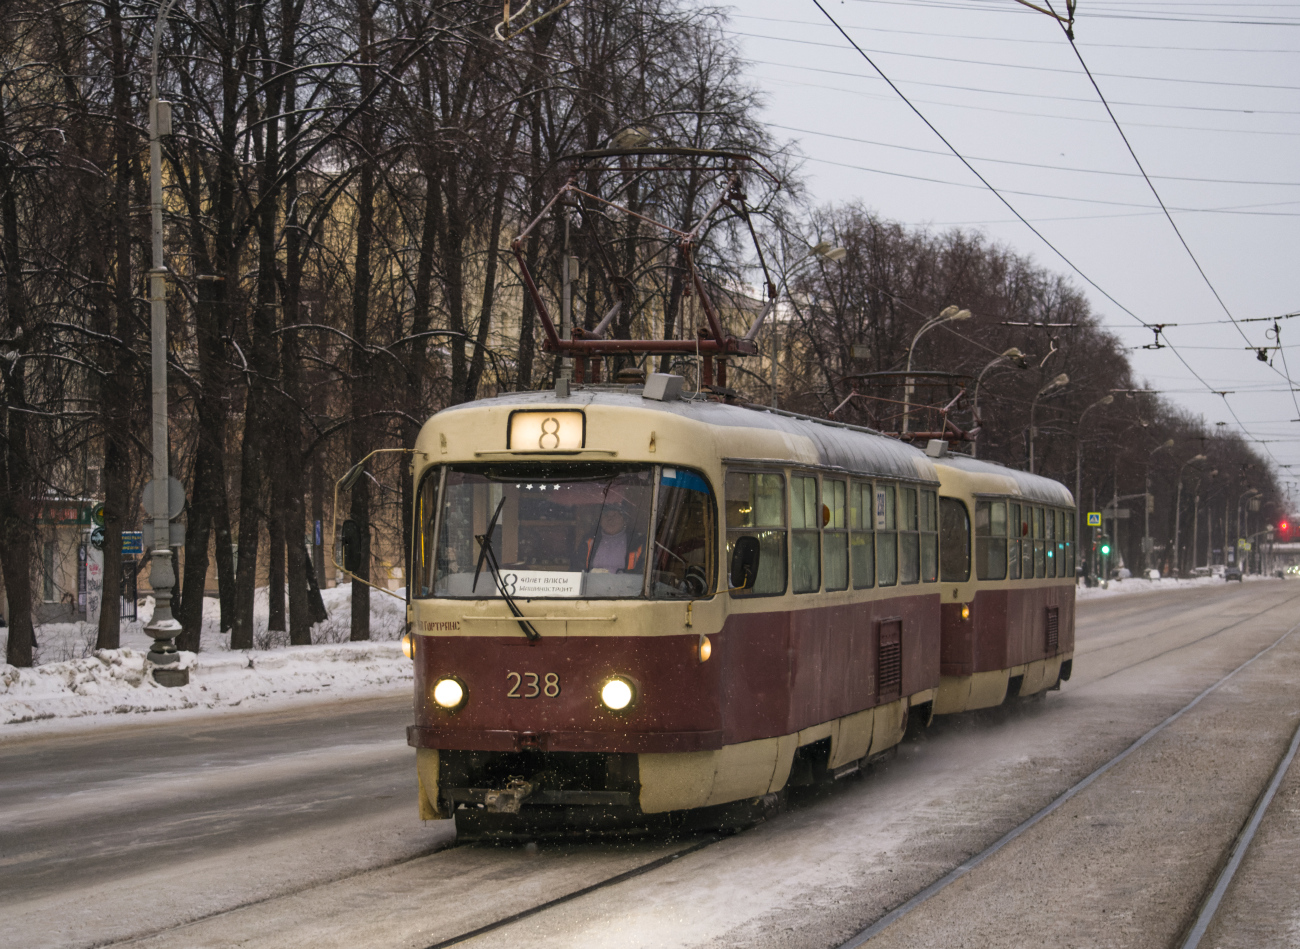 Yekaterinburg, Tatra T3SU # 238